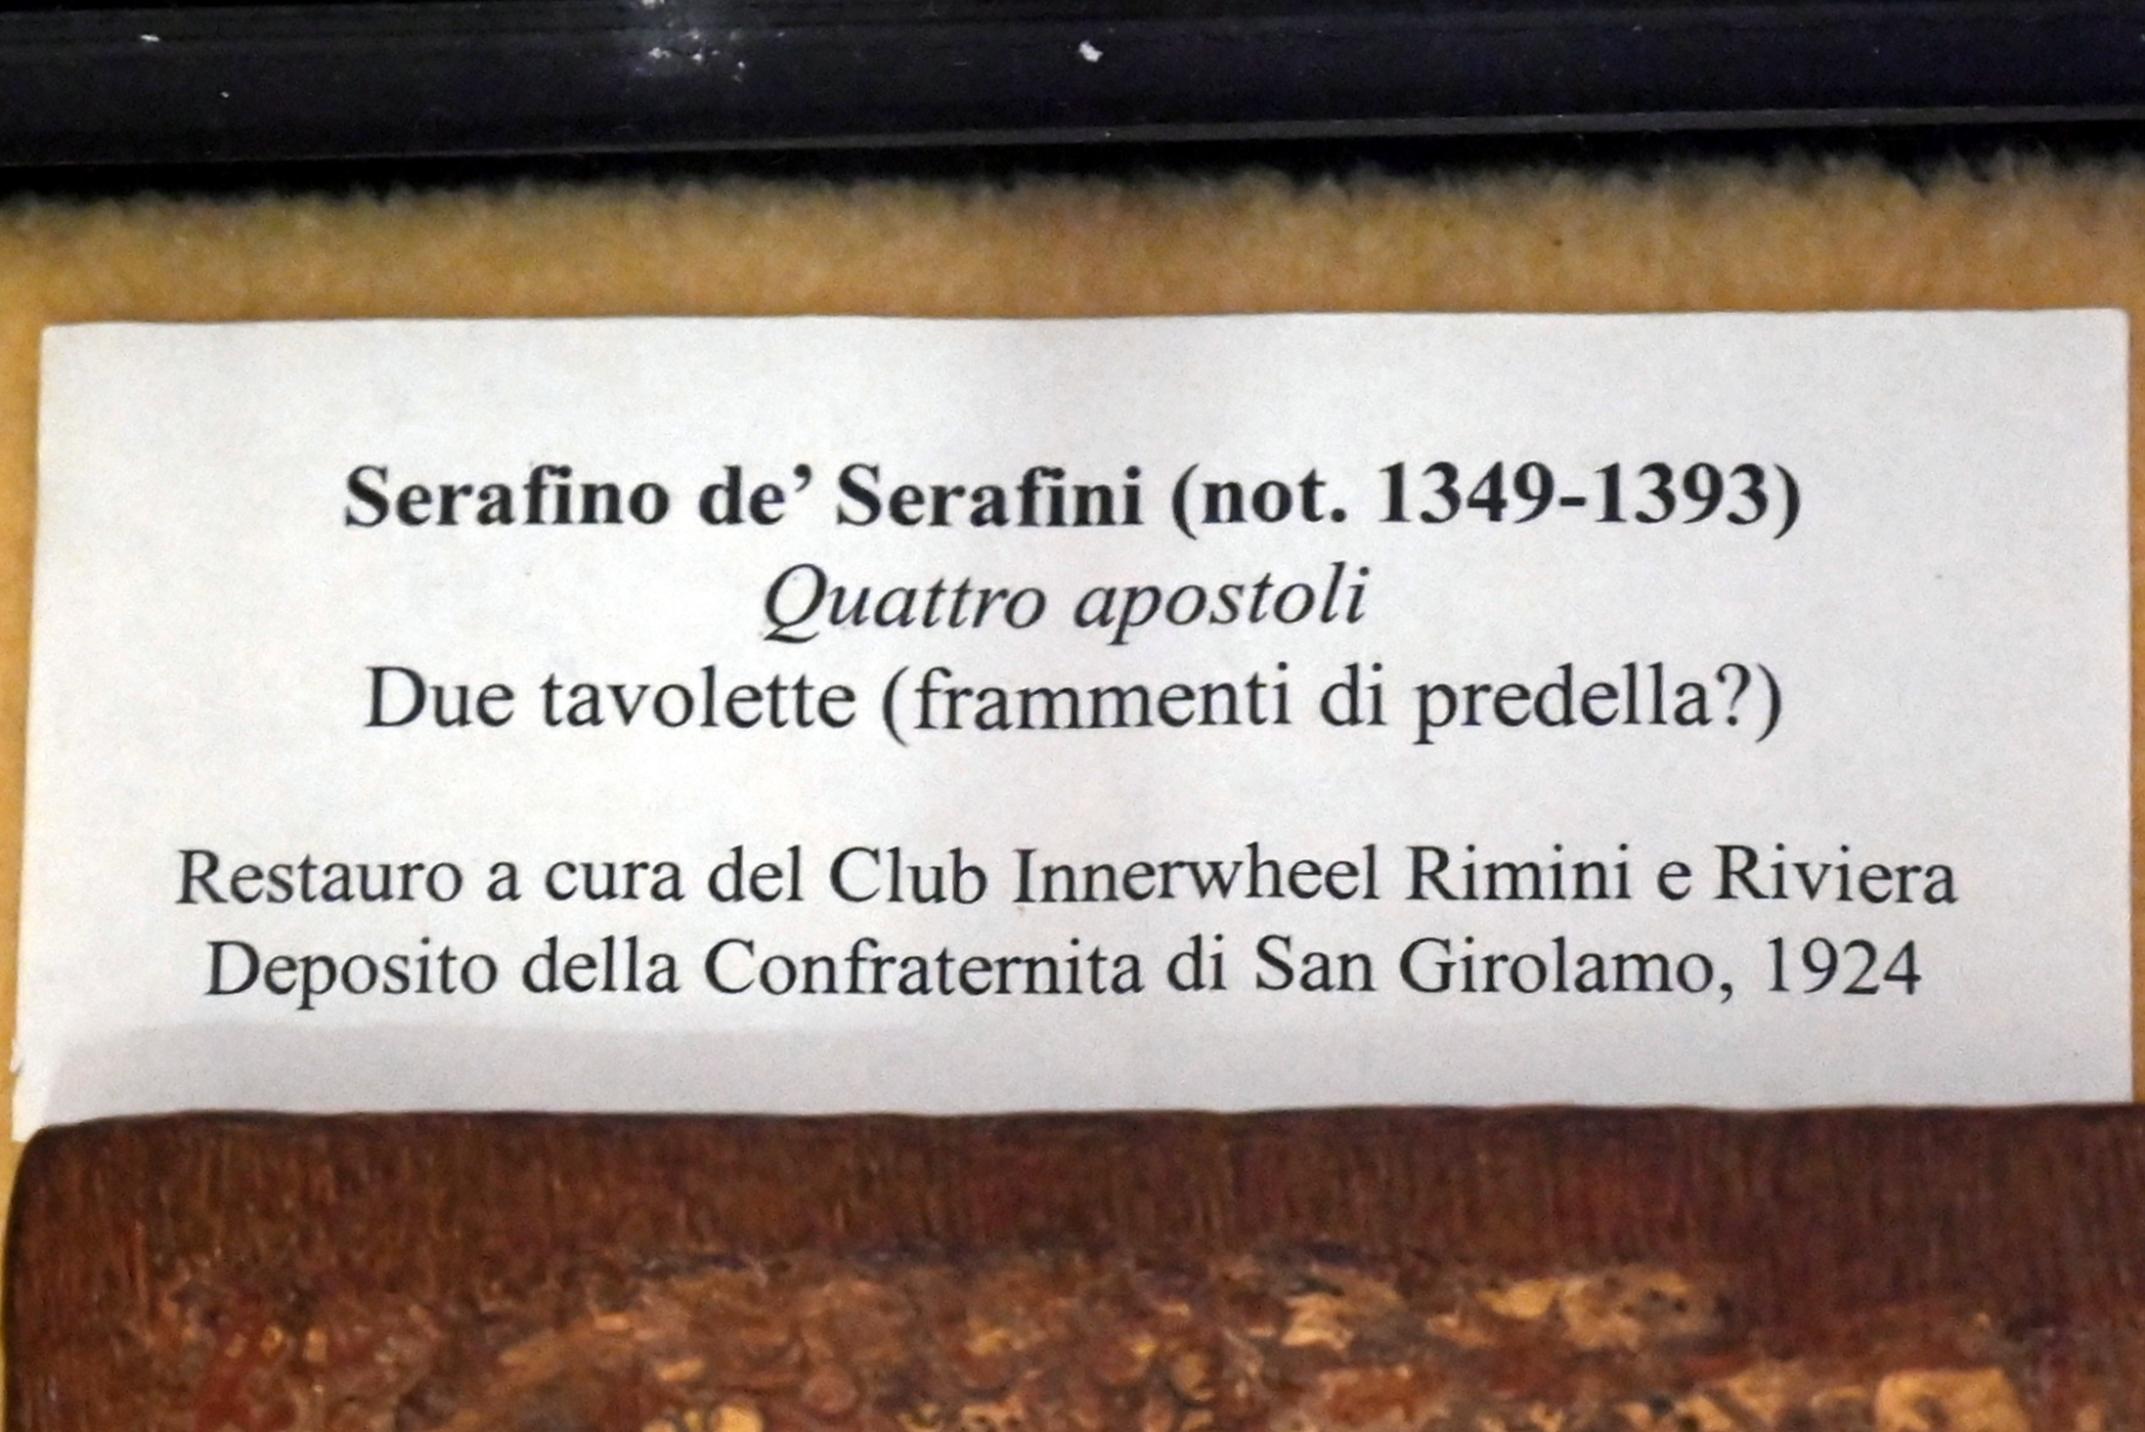 Serafino de' Serafini (Undatiert), Vier Apostel, Rimini, Stadtmuseum, Obergeschoss Saal 1, Undatiert, Bild 3/3